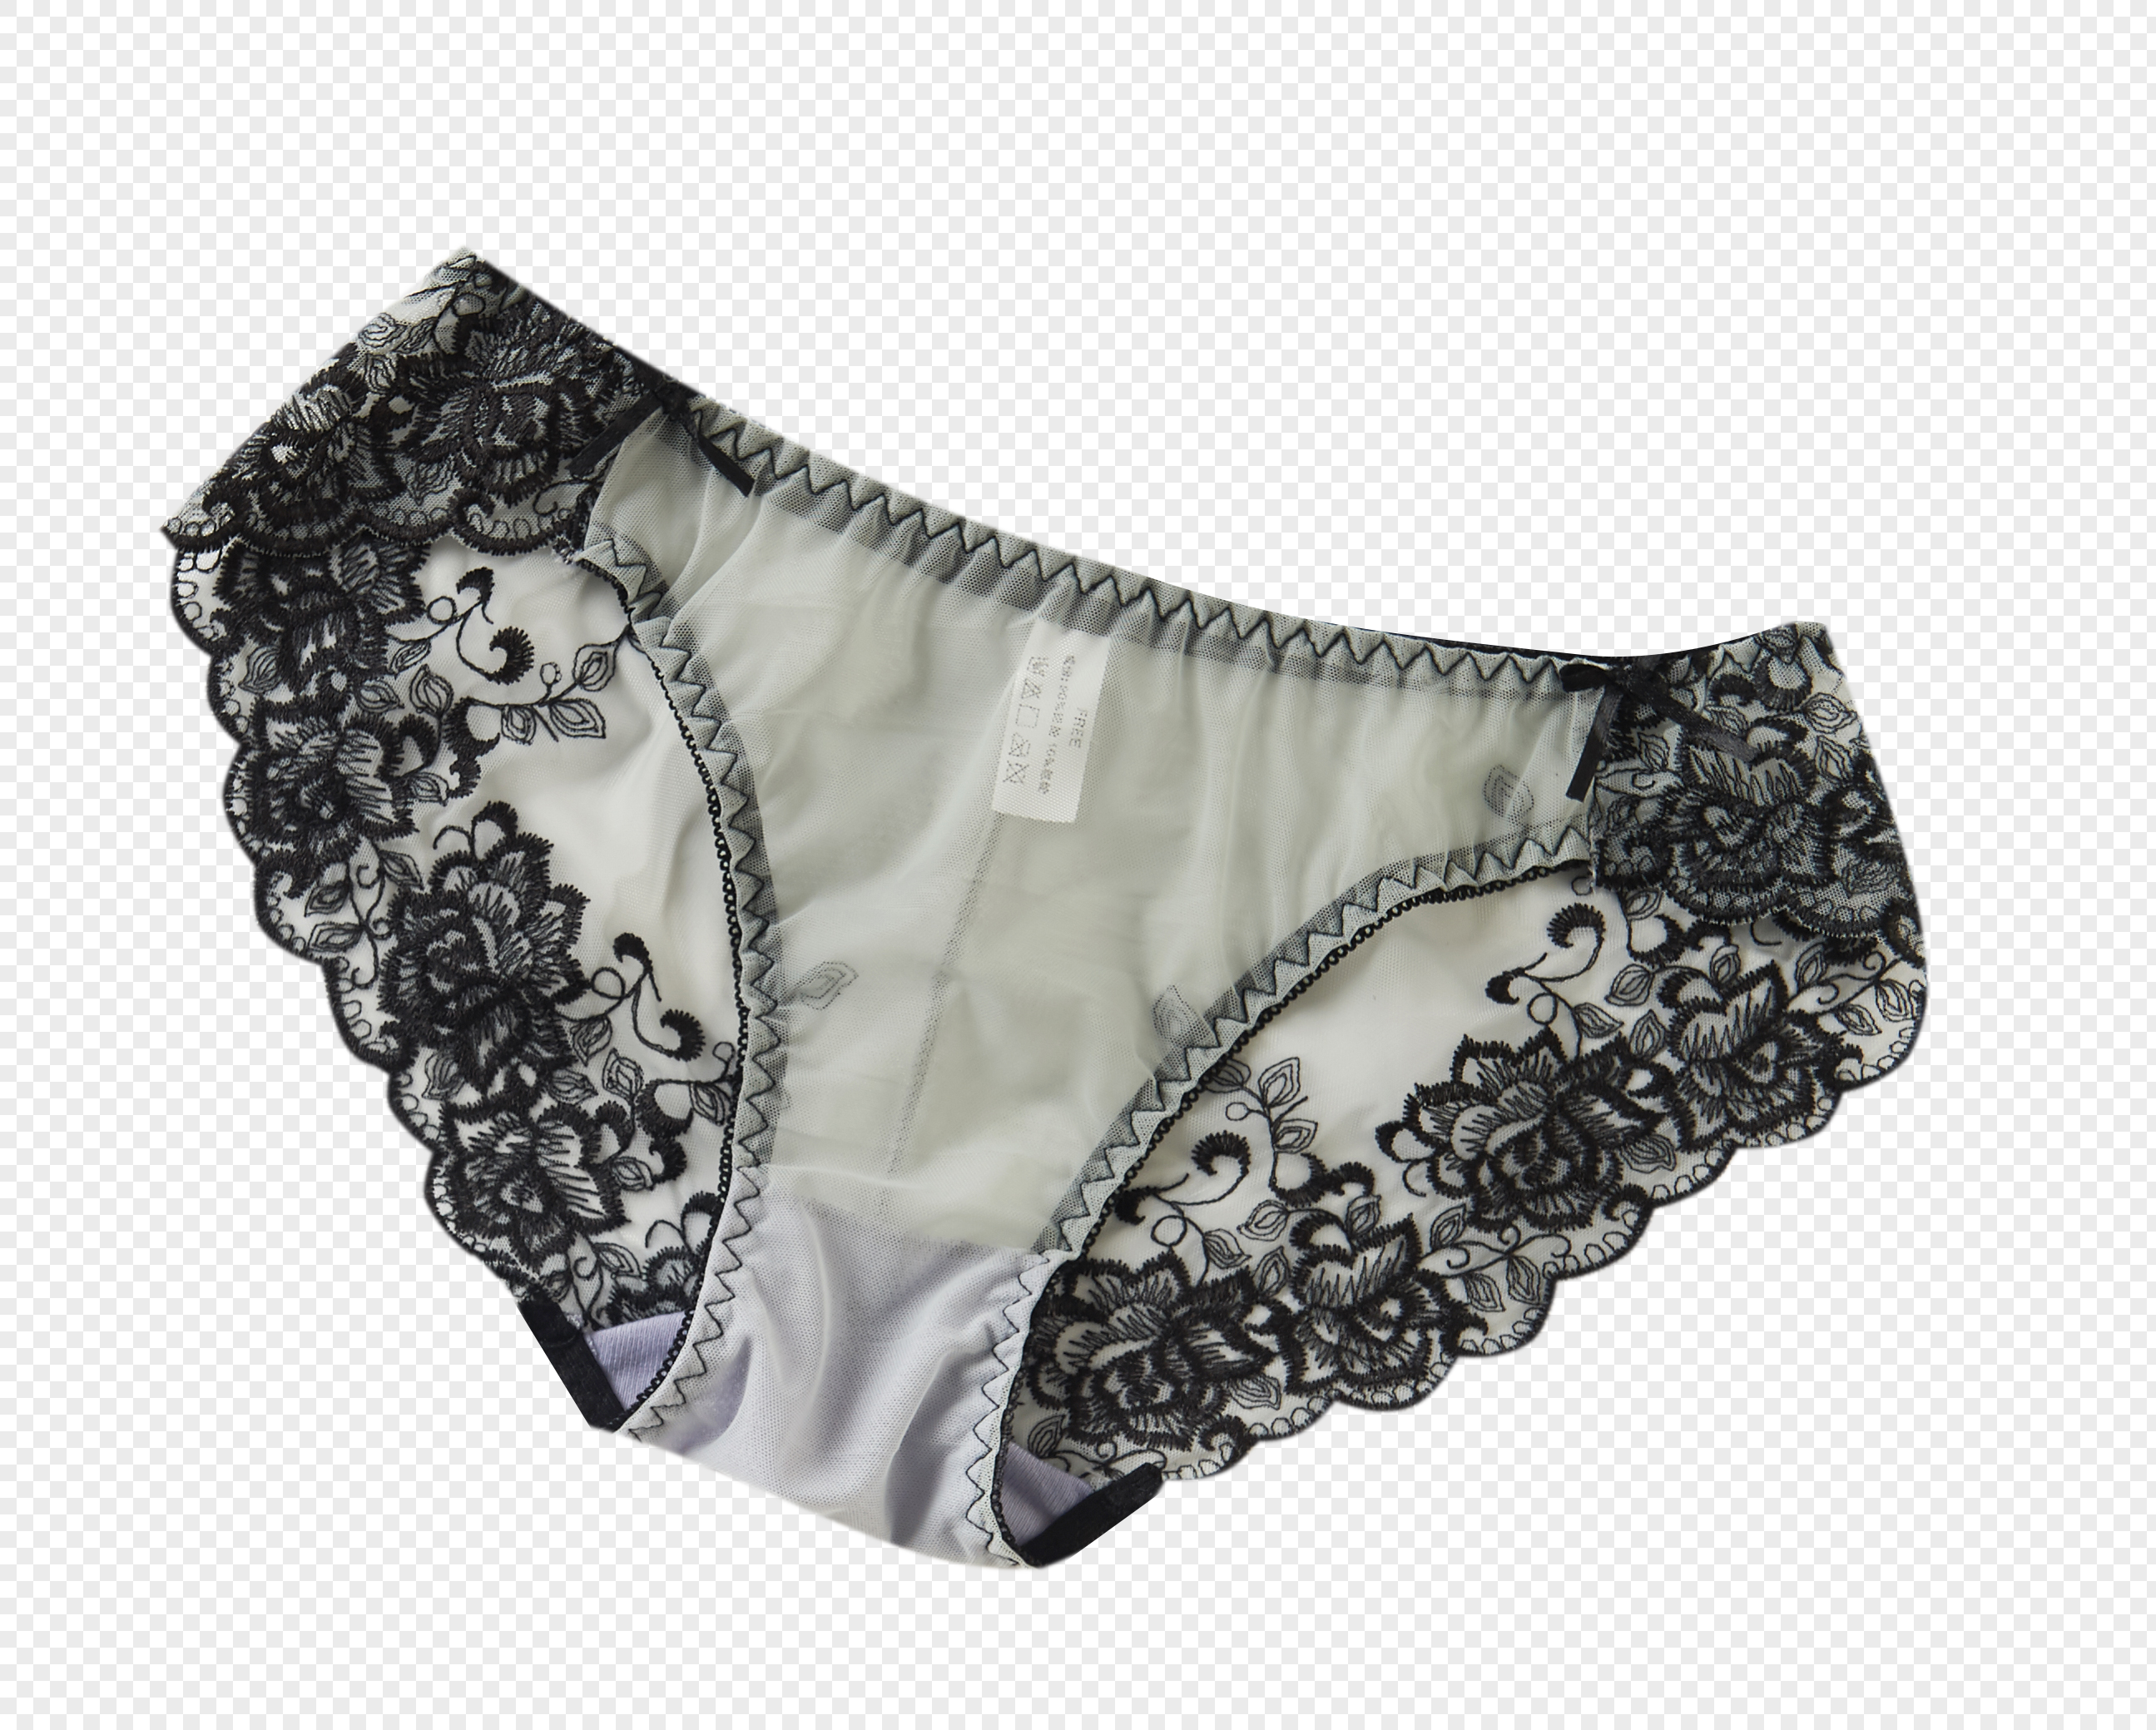 Ladies Underwear PNG Transparent Images Free Download